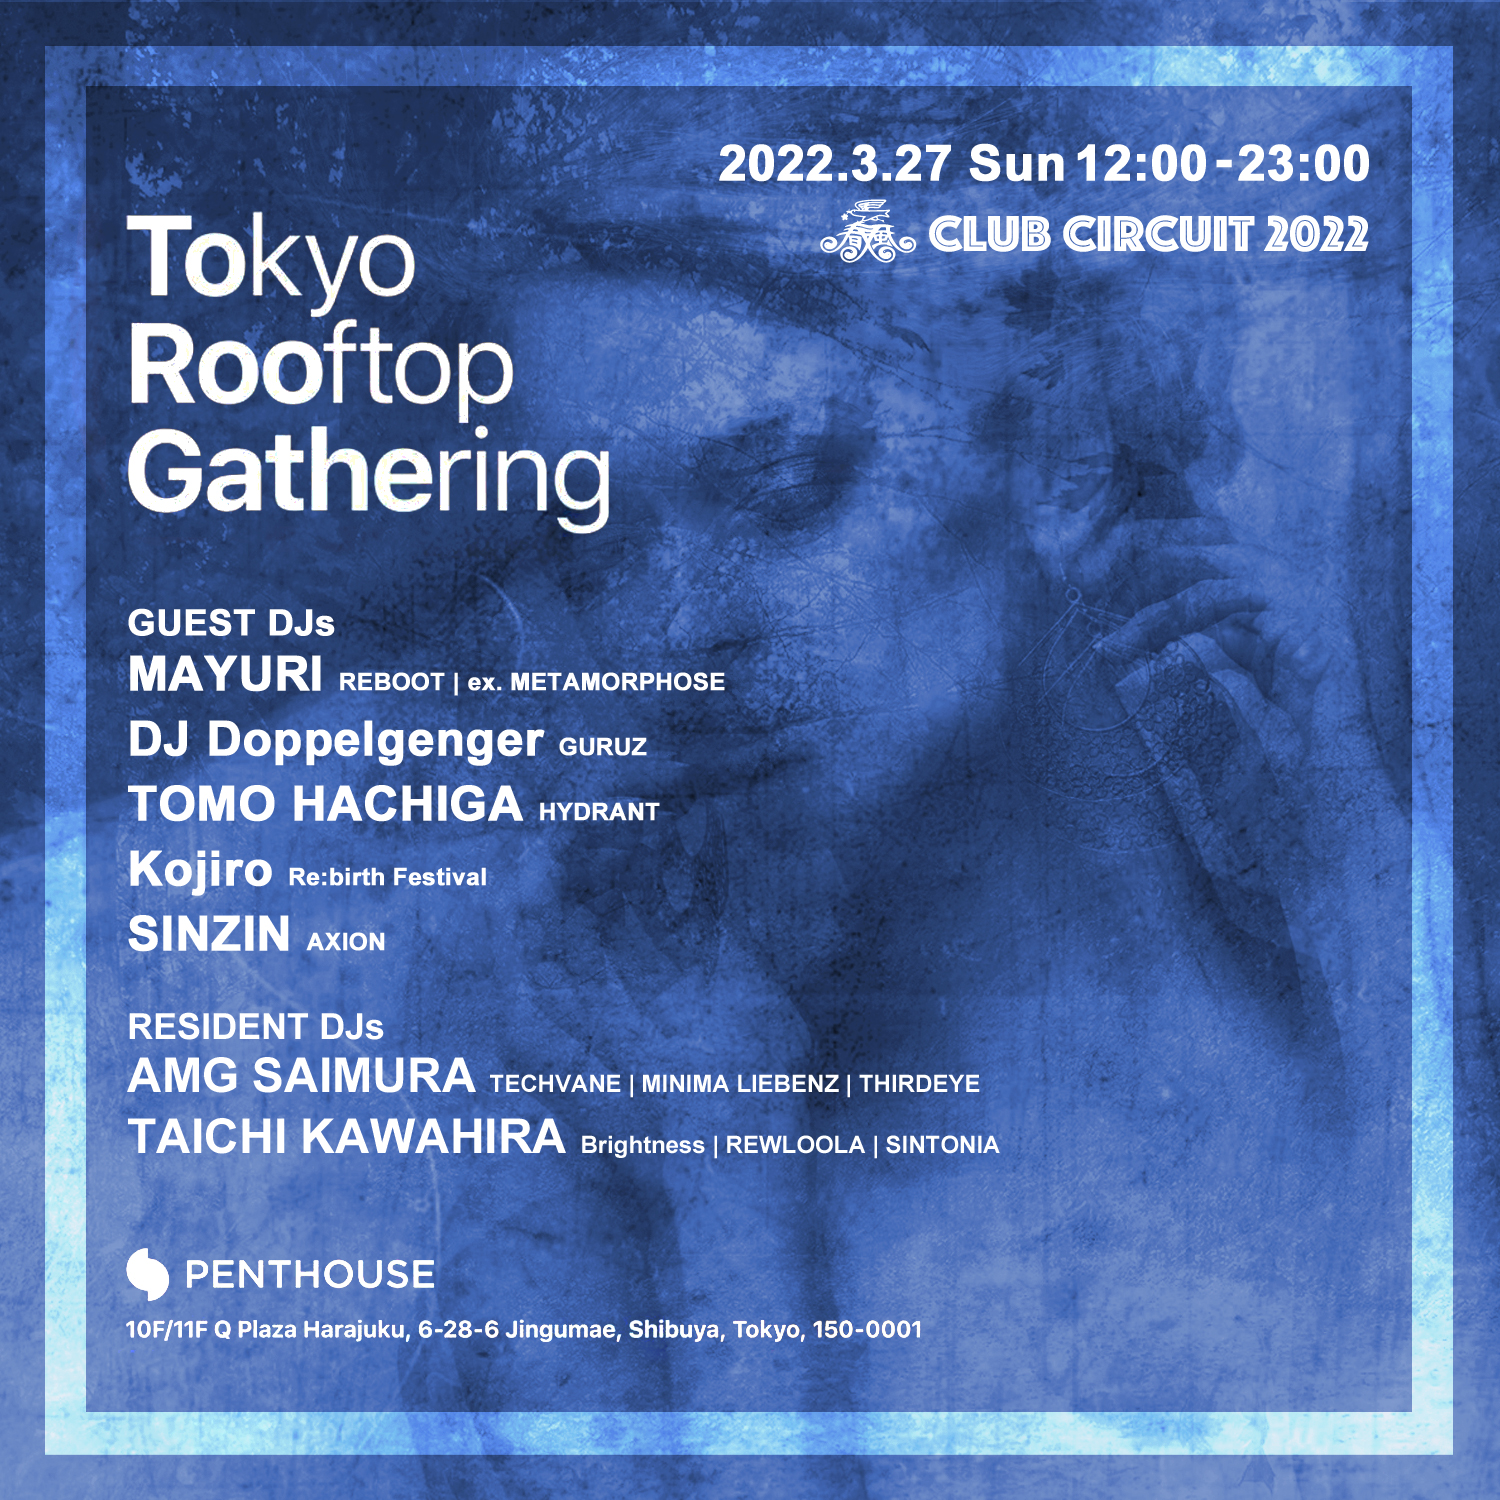 Tokyo Rooftop Gathering  “春風 CLUB CIRCUIT 2022”